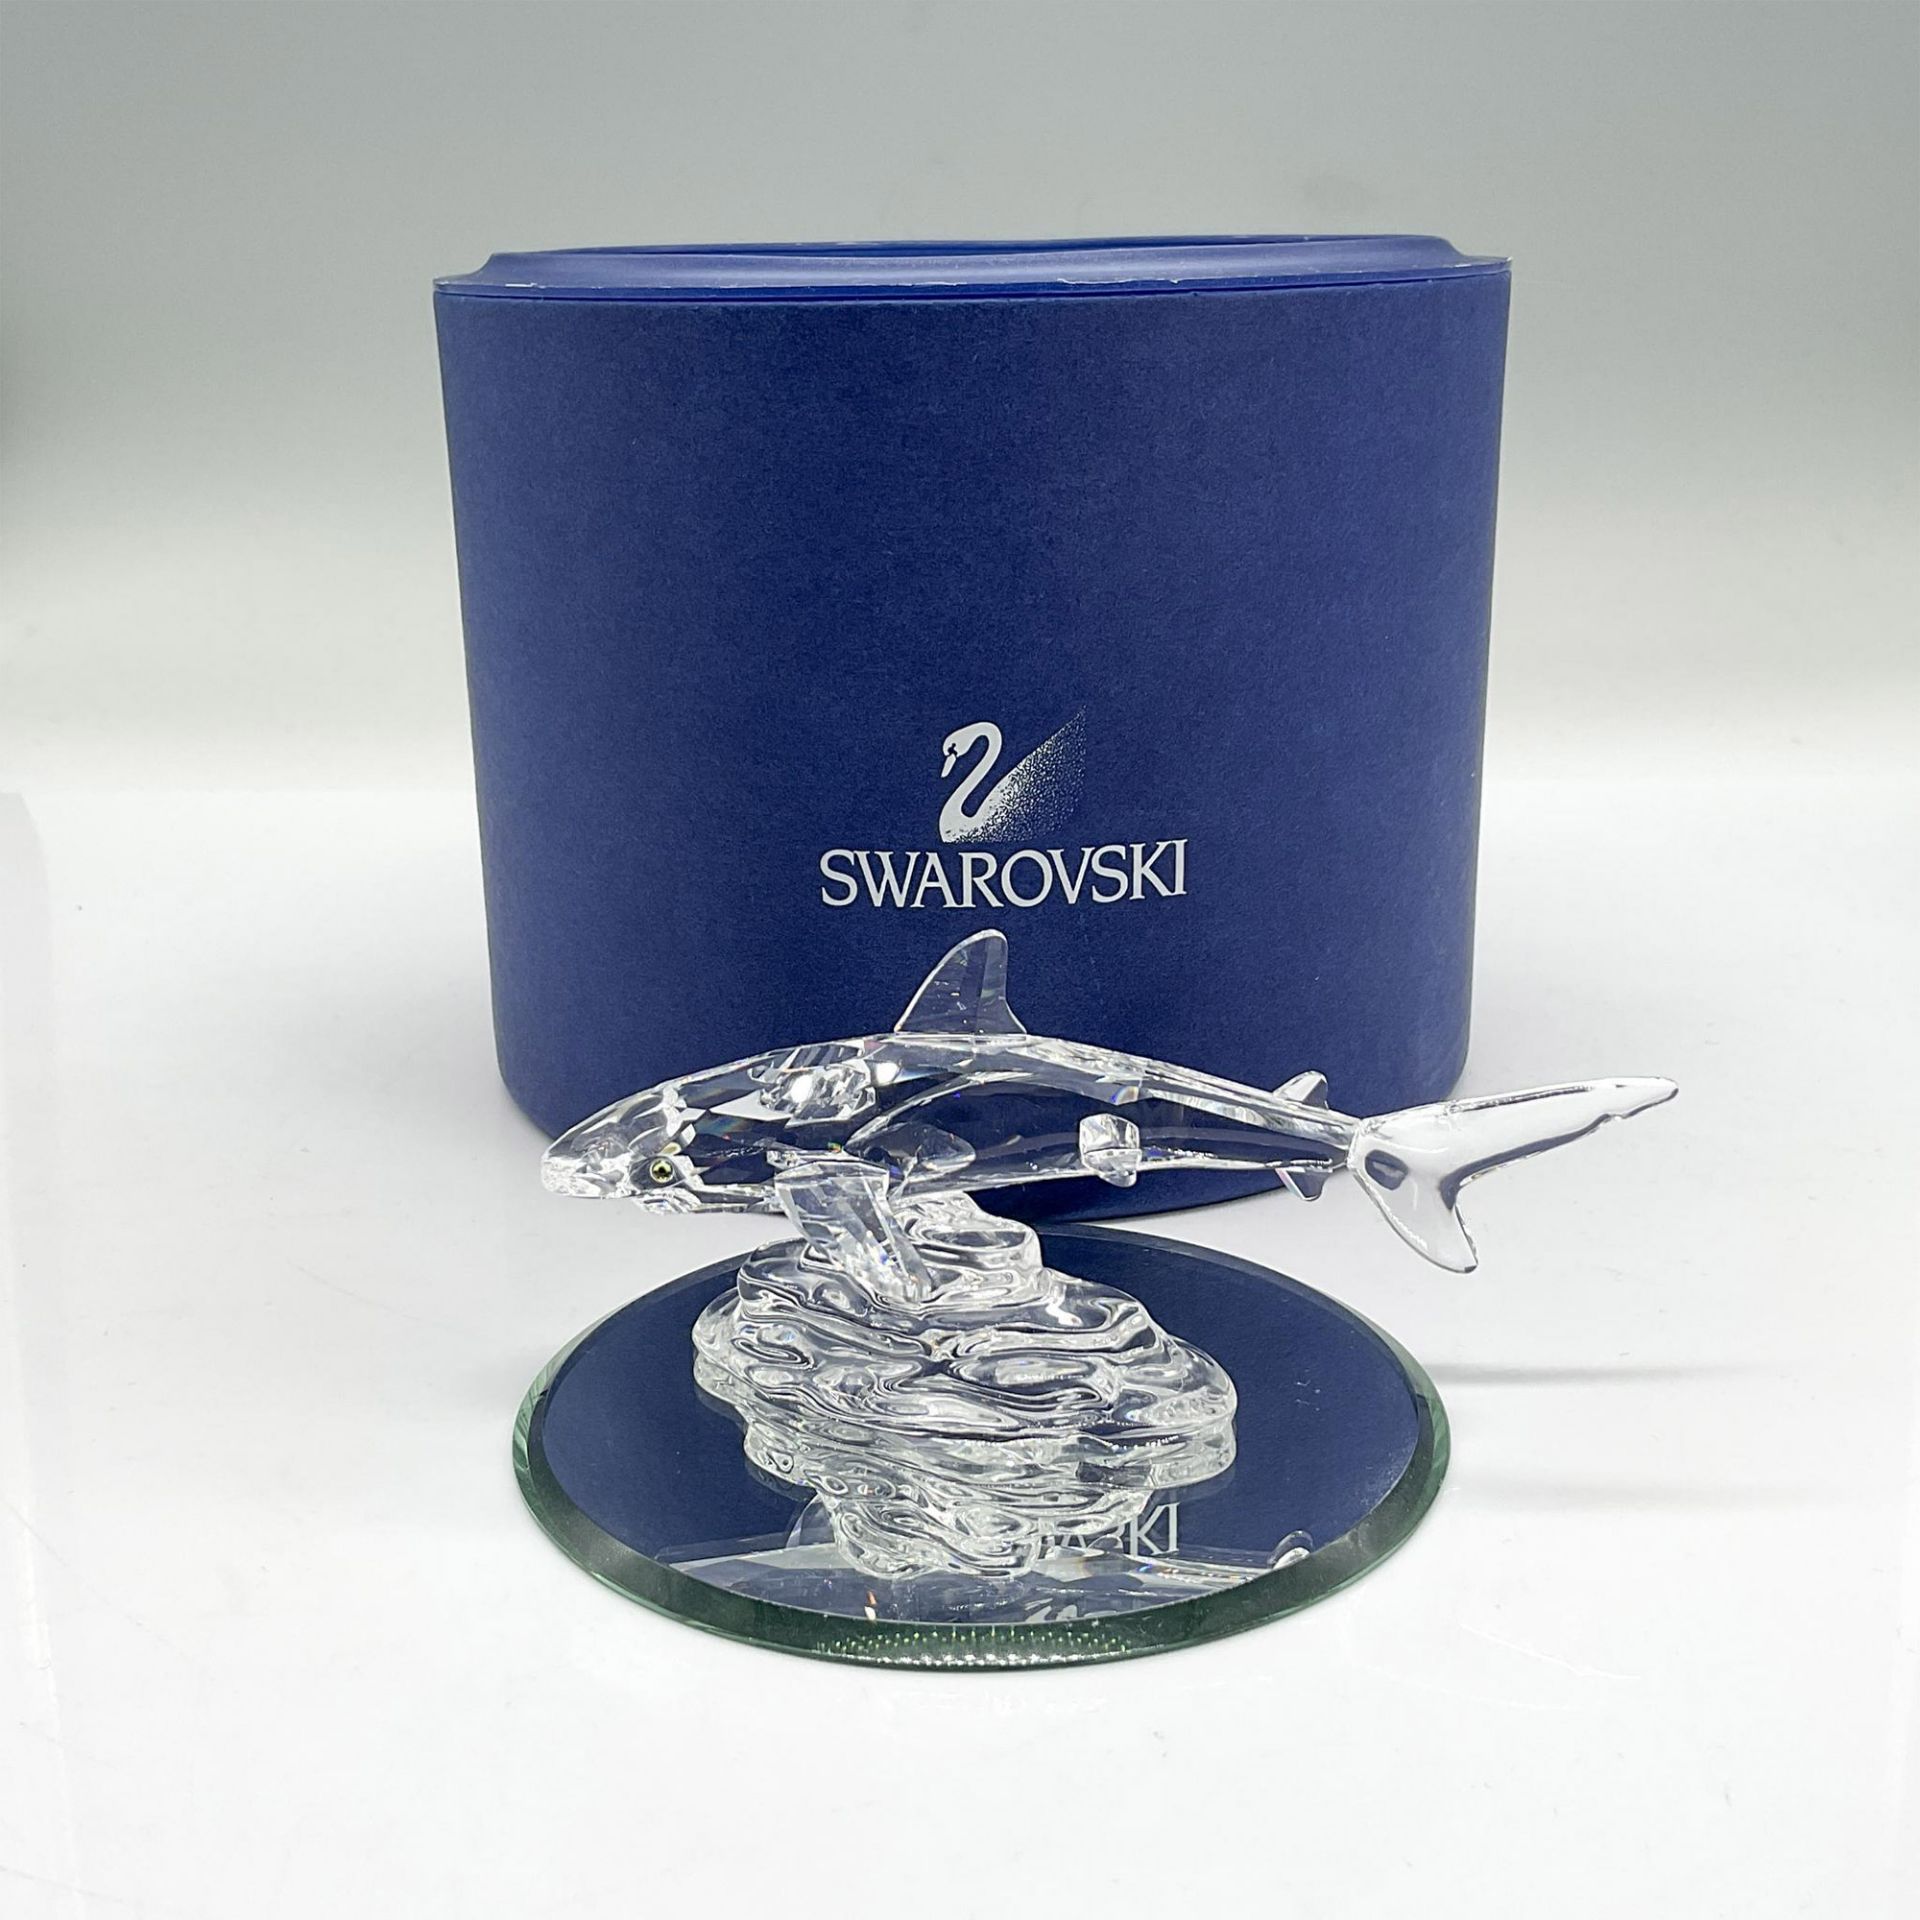 Swarovski Silver Crystal Figurine, Baby Shark - Image 4 of 4